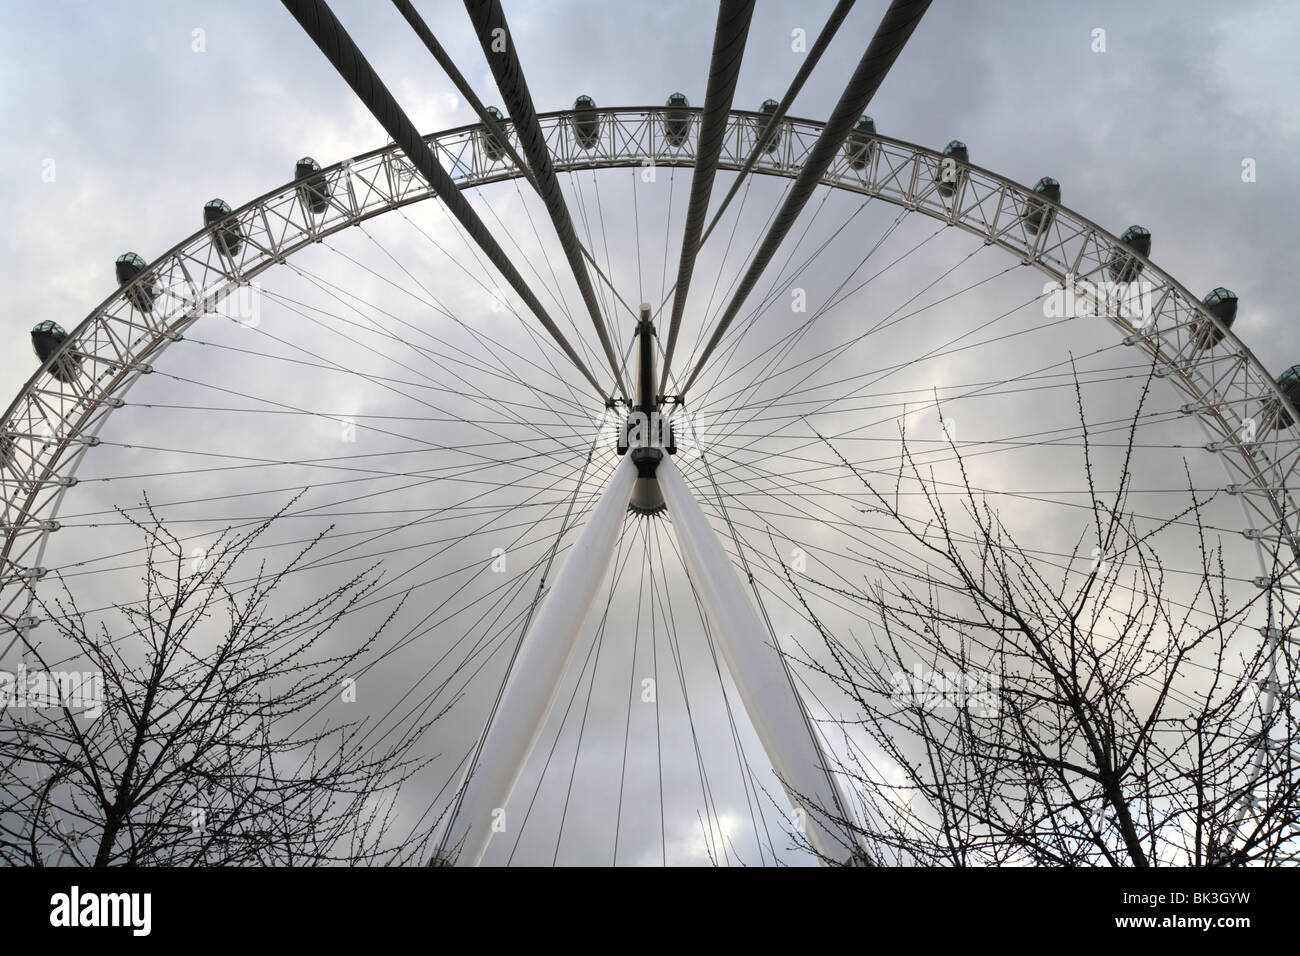 Symmetrical London Eye, Ferris wheel, Millennium Wheel, England's Capital city. Stock Photo